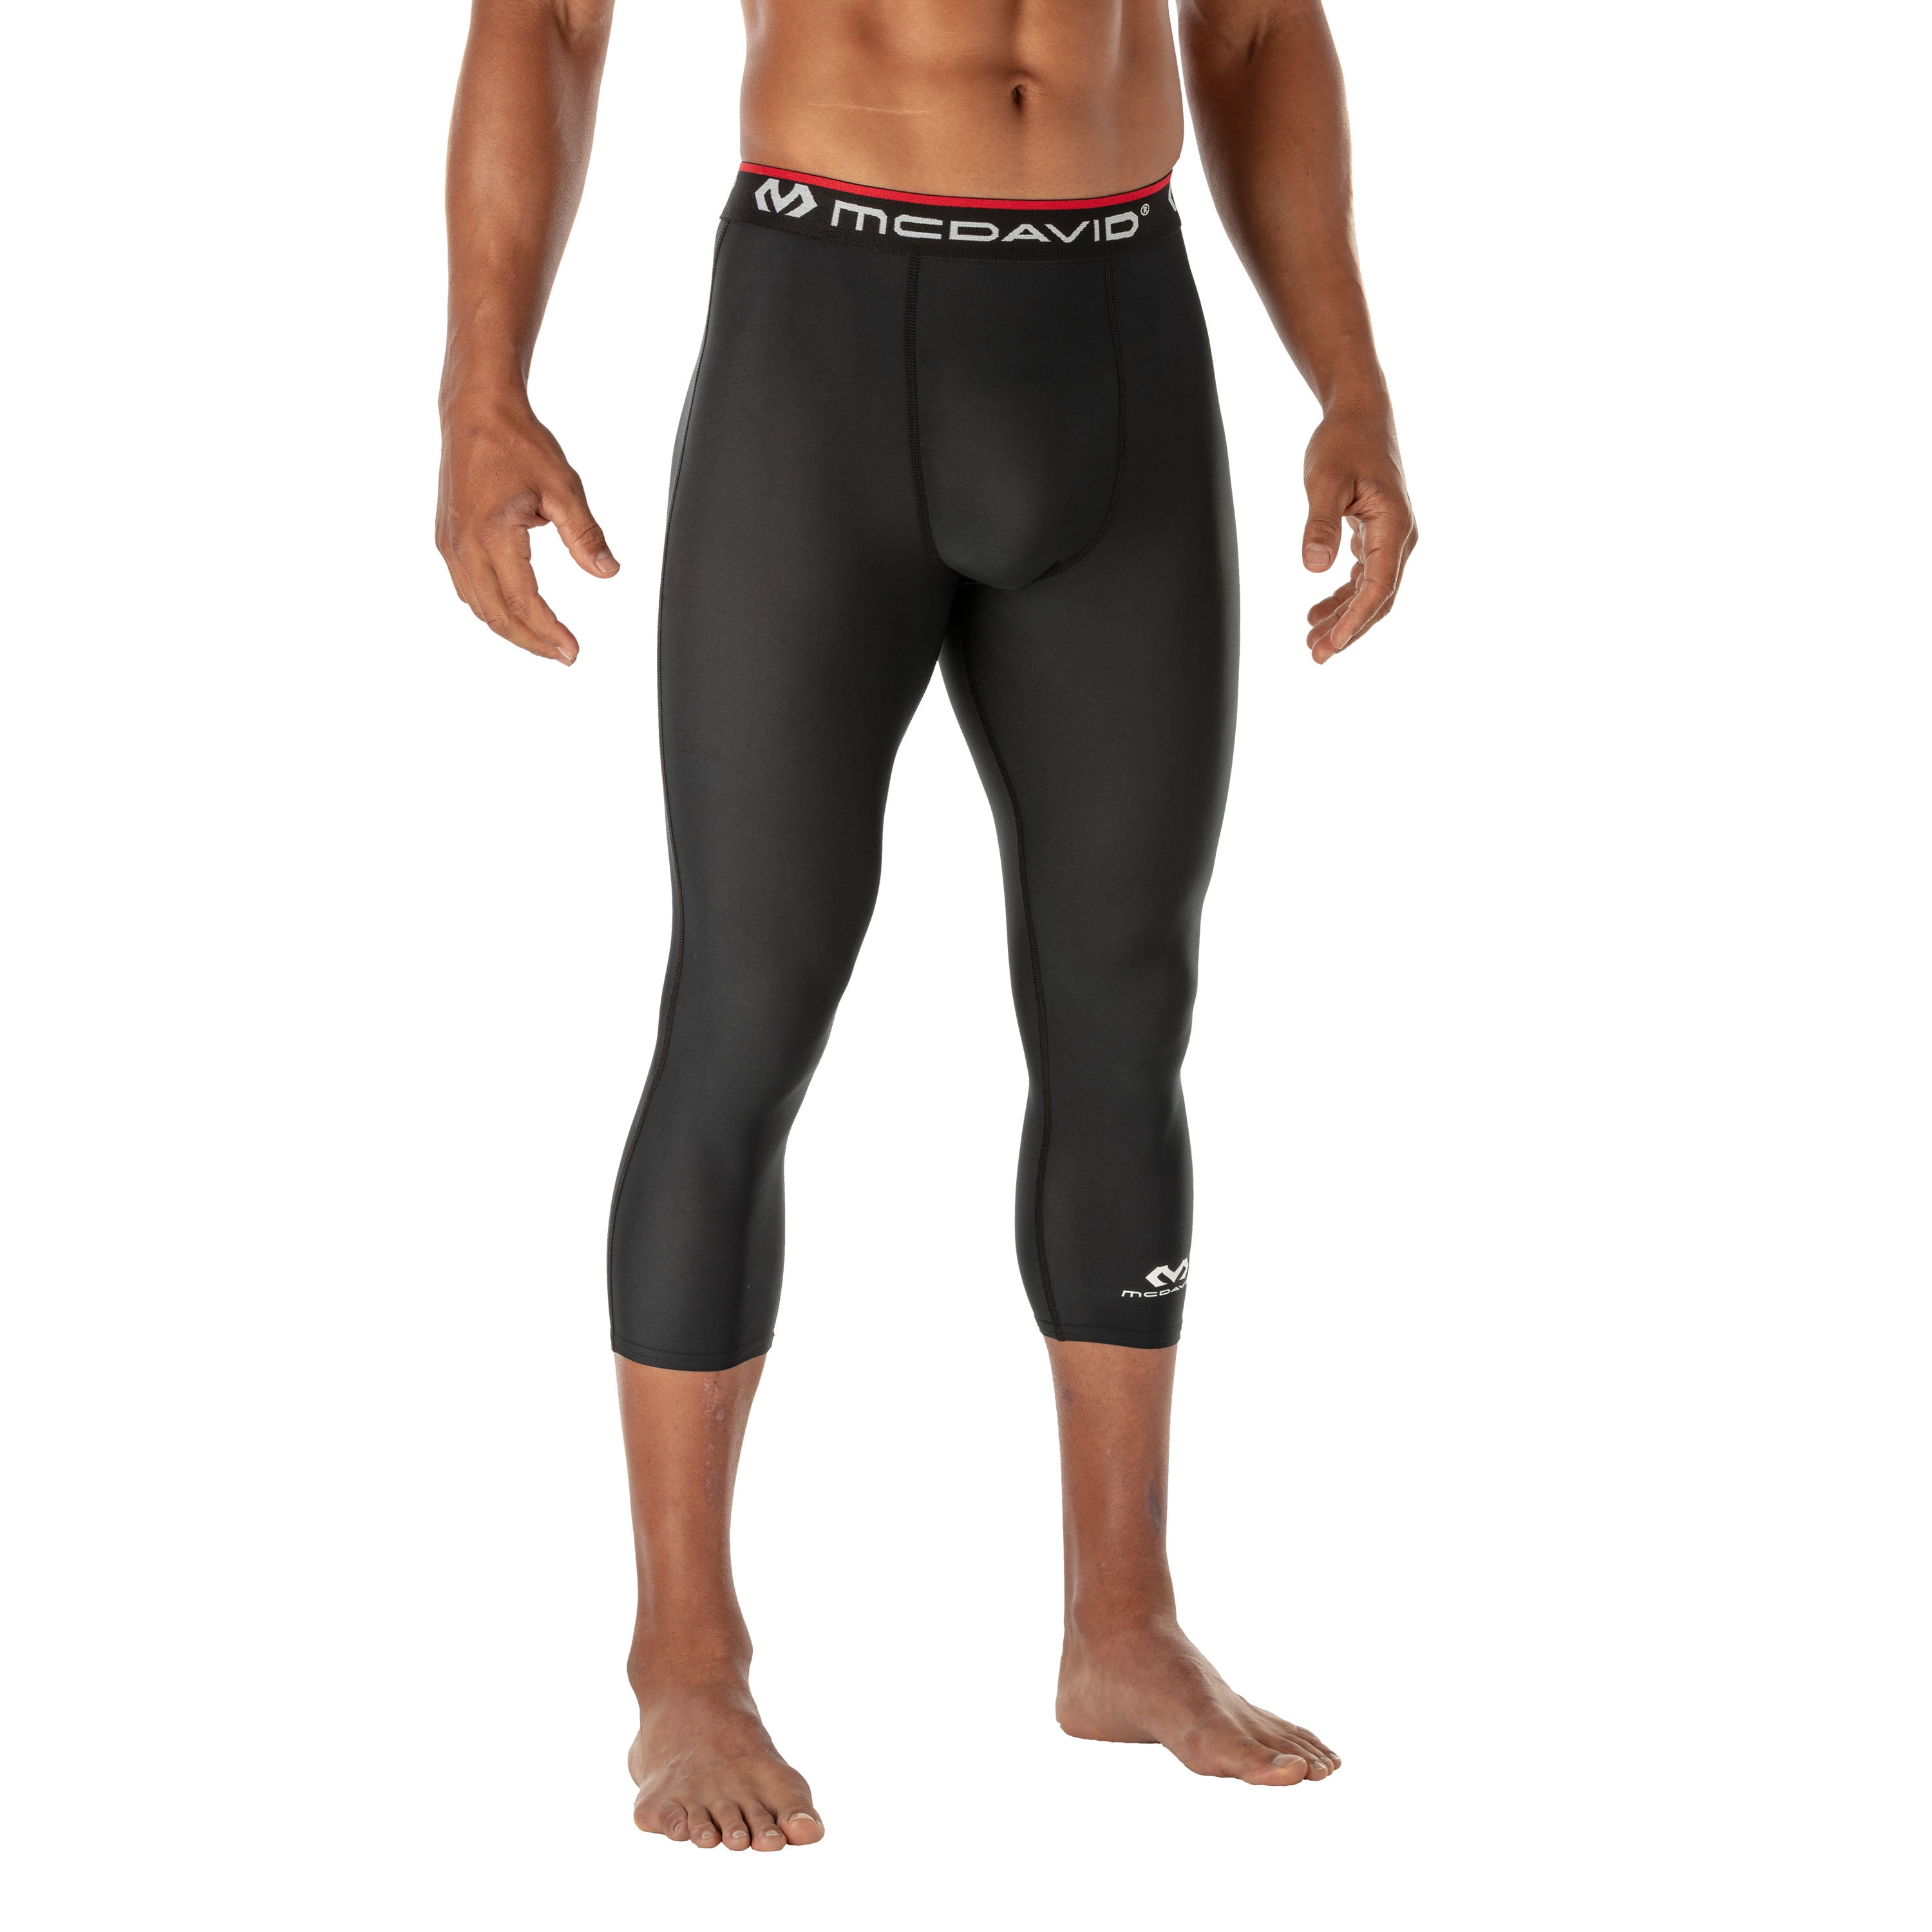 X-Large Compression Athletic Pants, Adult Sport Tight McDavid 3/4 Black,